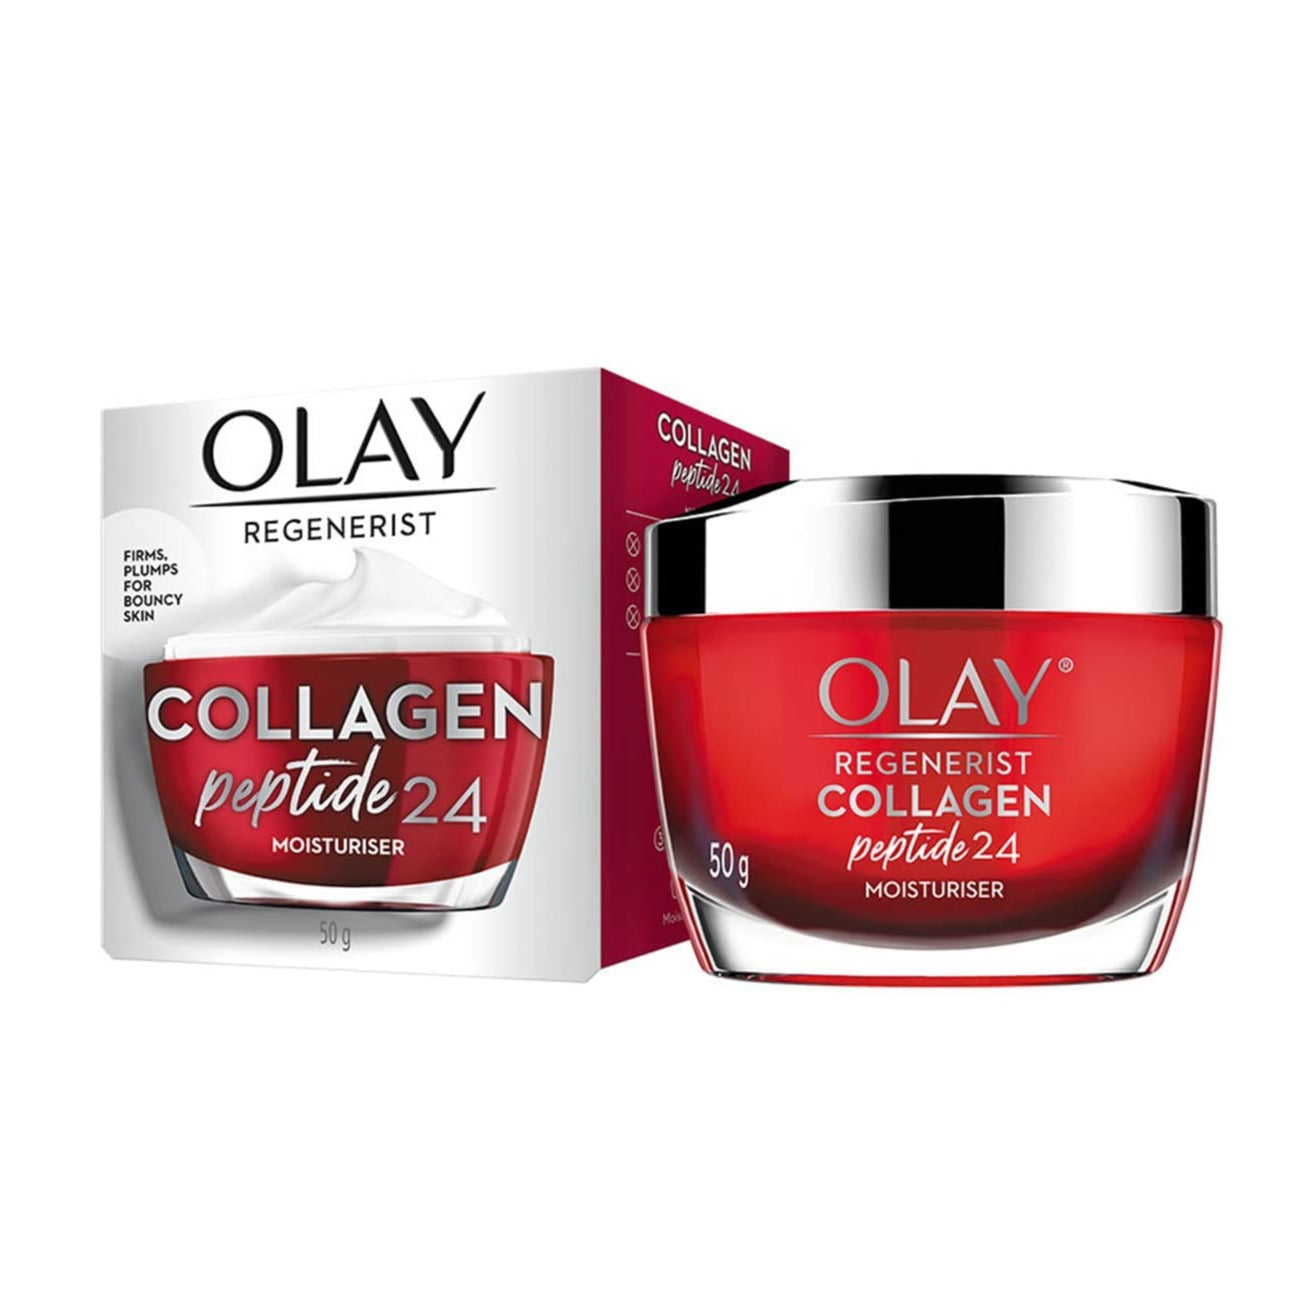 Olay Regenerist Collagen Peptide 24 Face Cream Moisturiser 50g